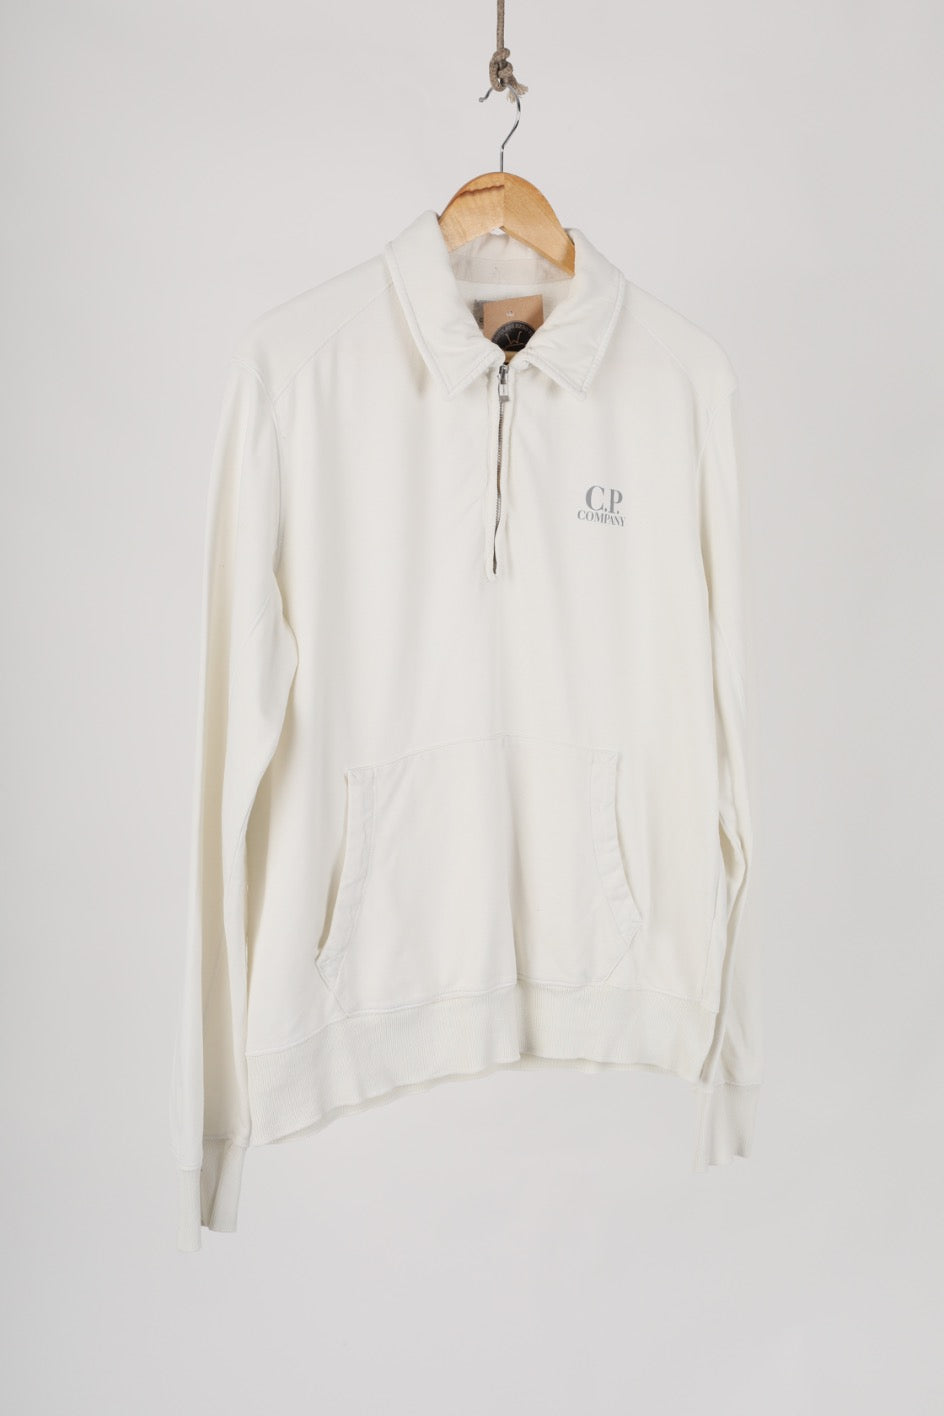 2006 C.P Company 1/4 zip sweatshirt (L)